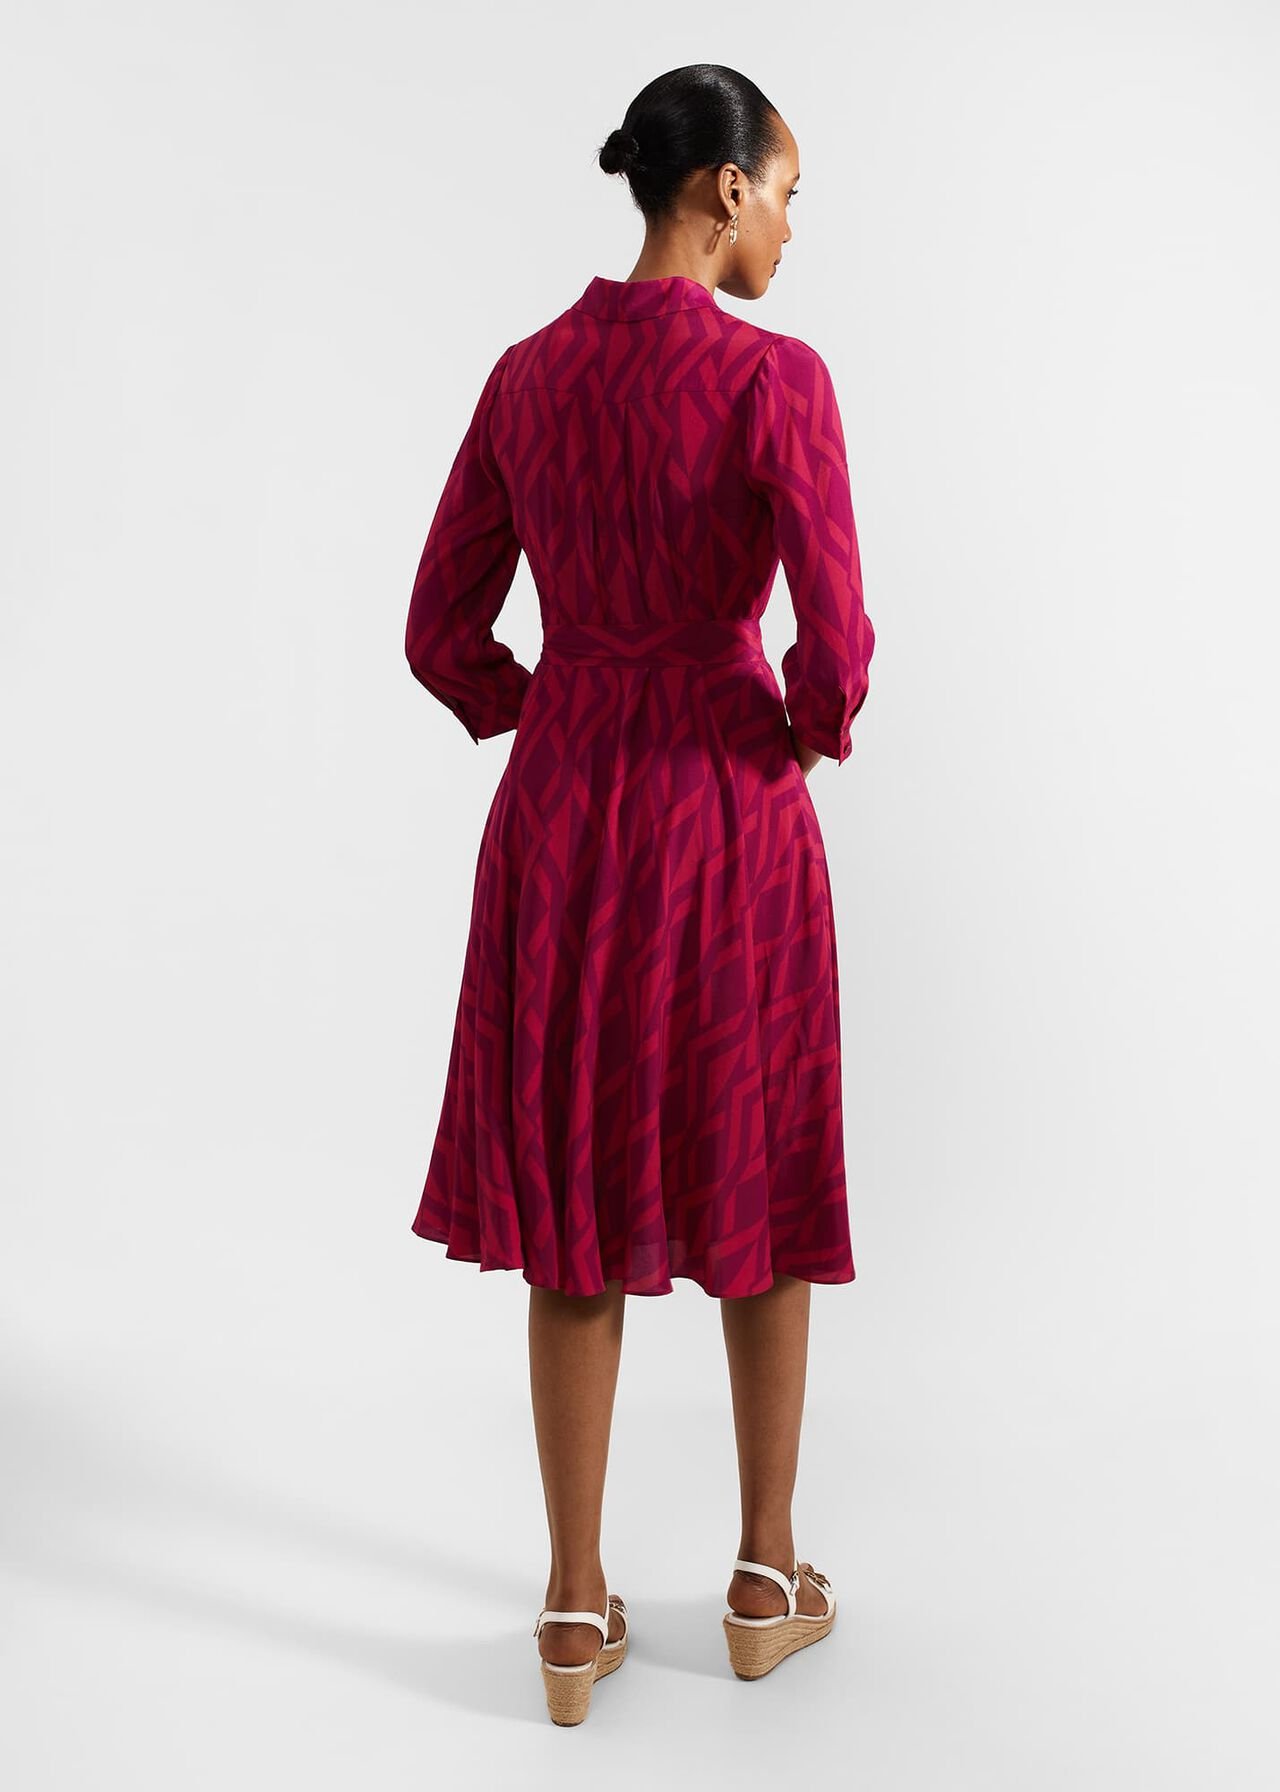 Lainey Dress, Pink Multi, hi-res